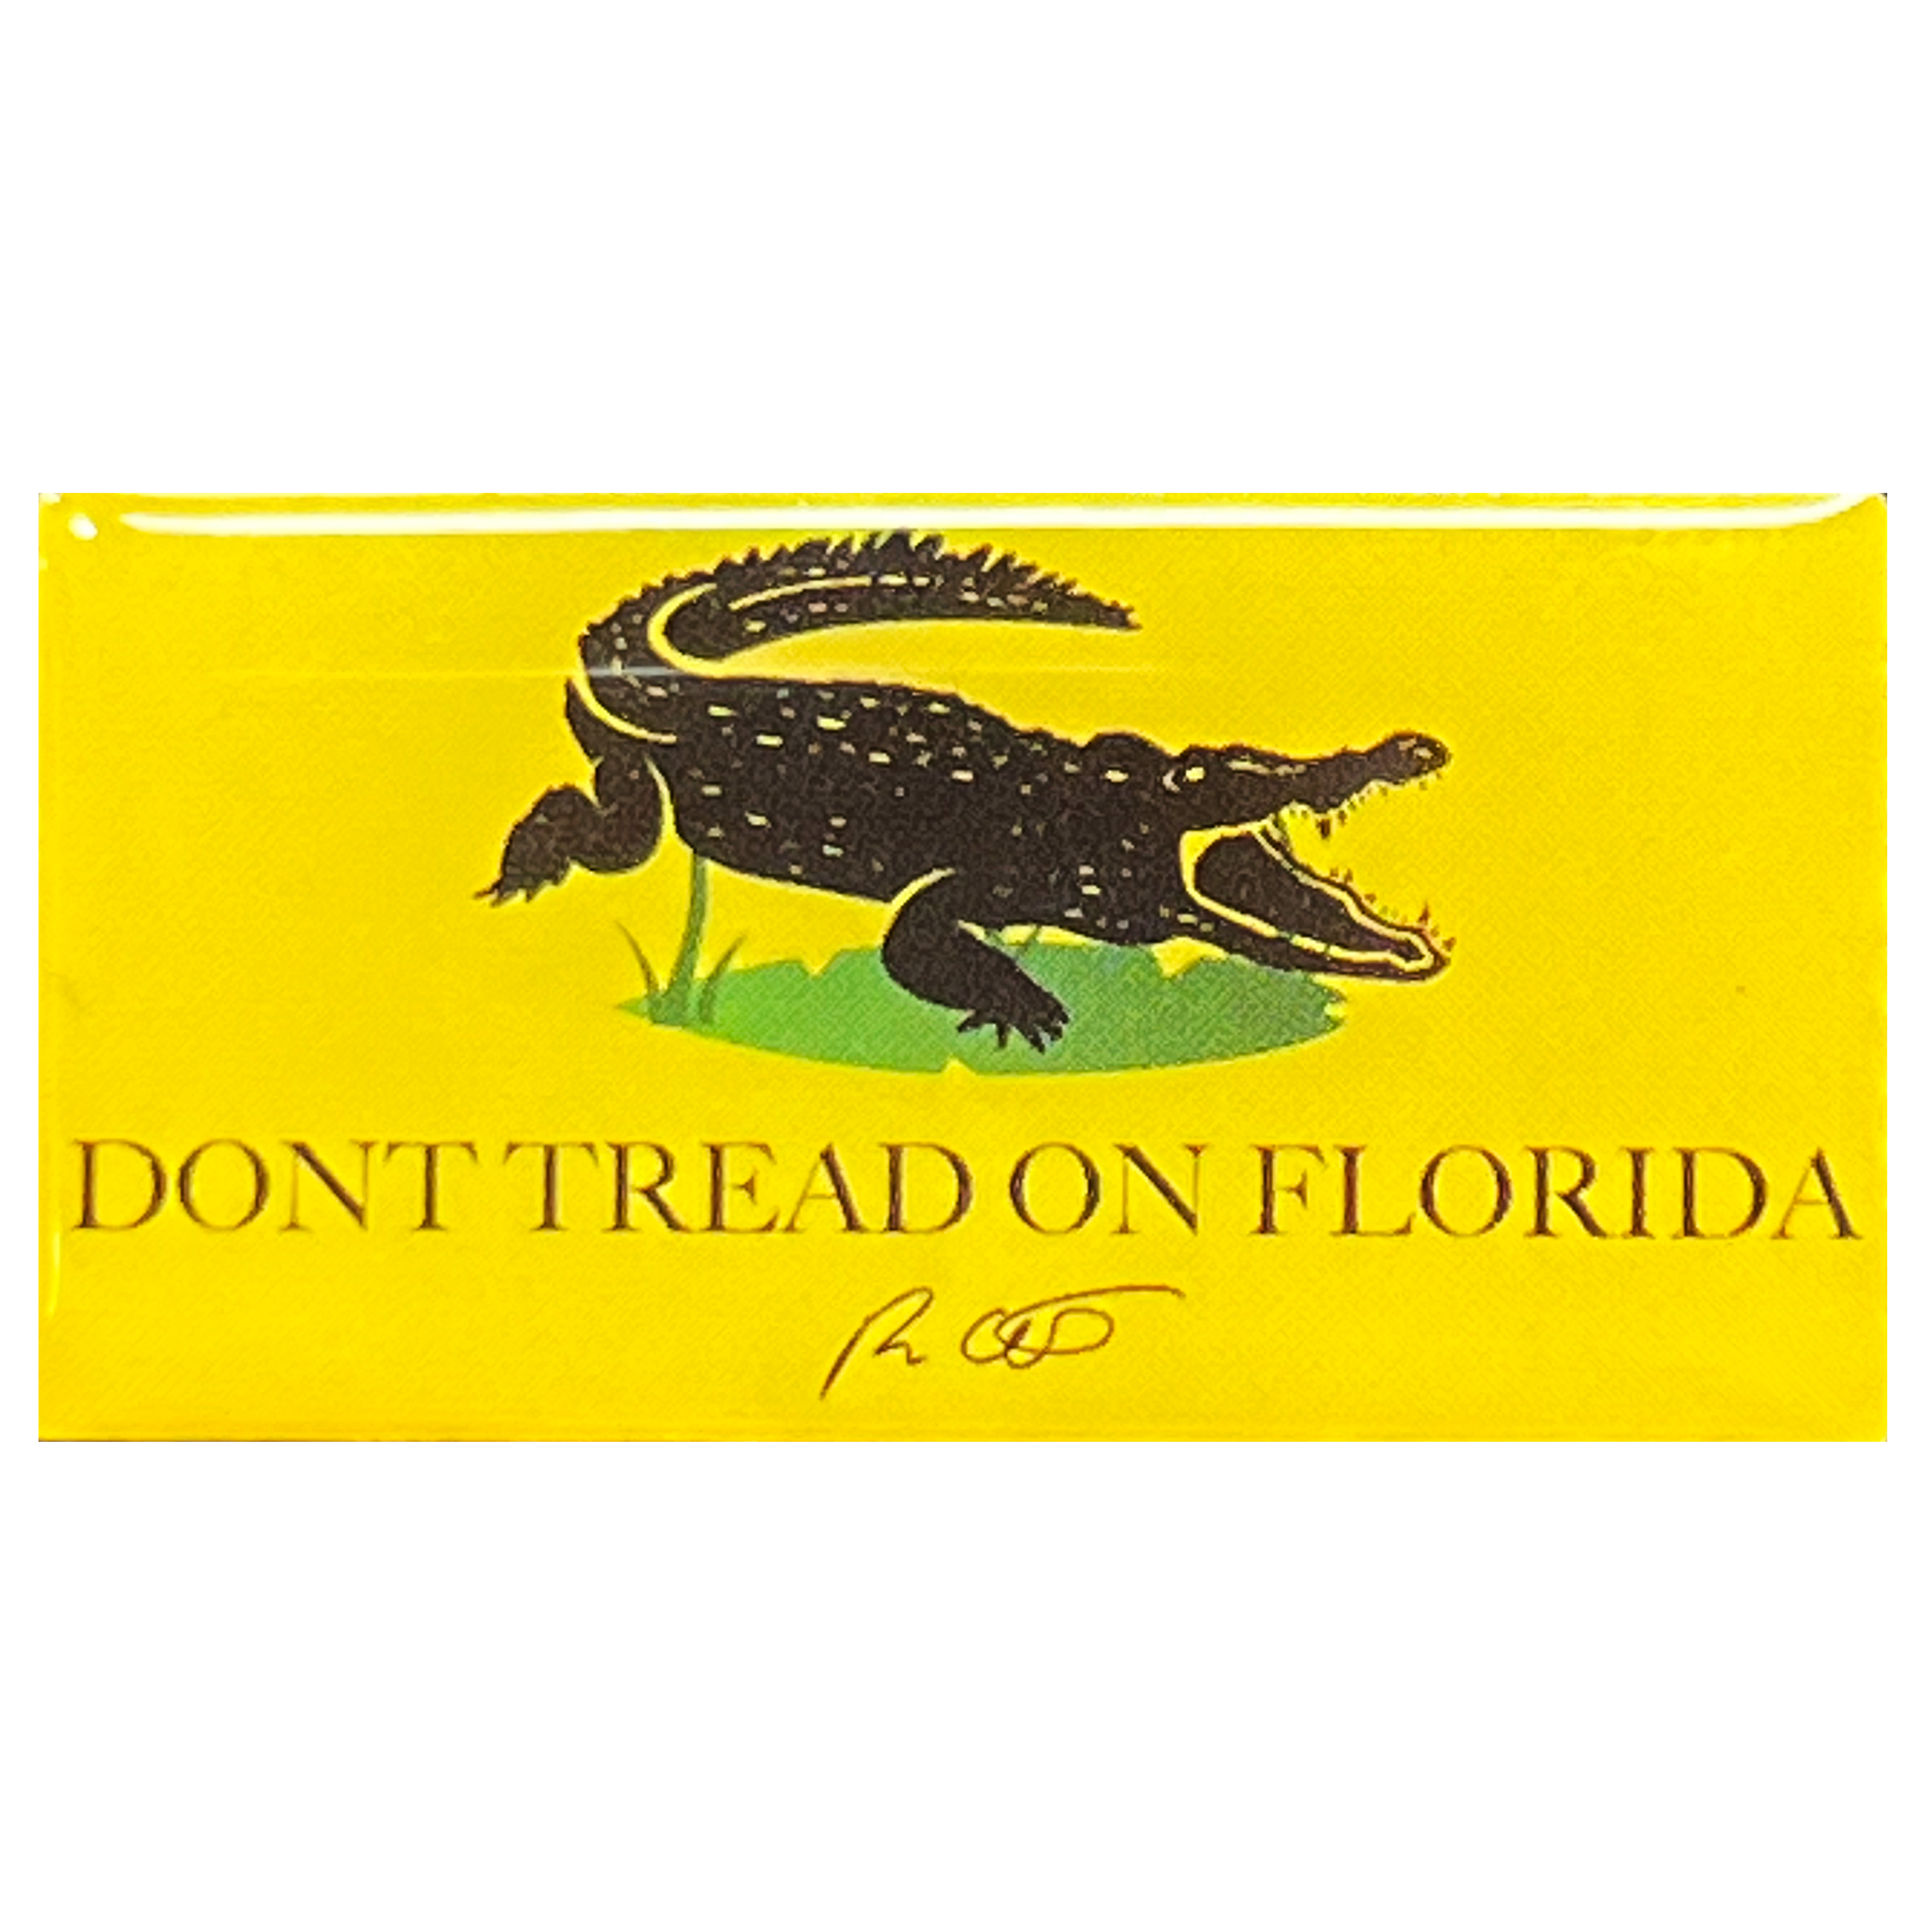 GL1-018 Florida Governor Ron DeSantis inspired Don't Tread on Florida 2nd Amendment Flag pin